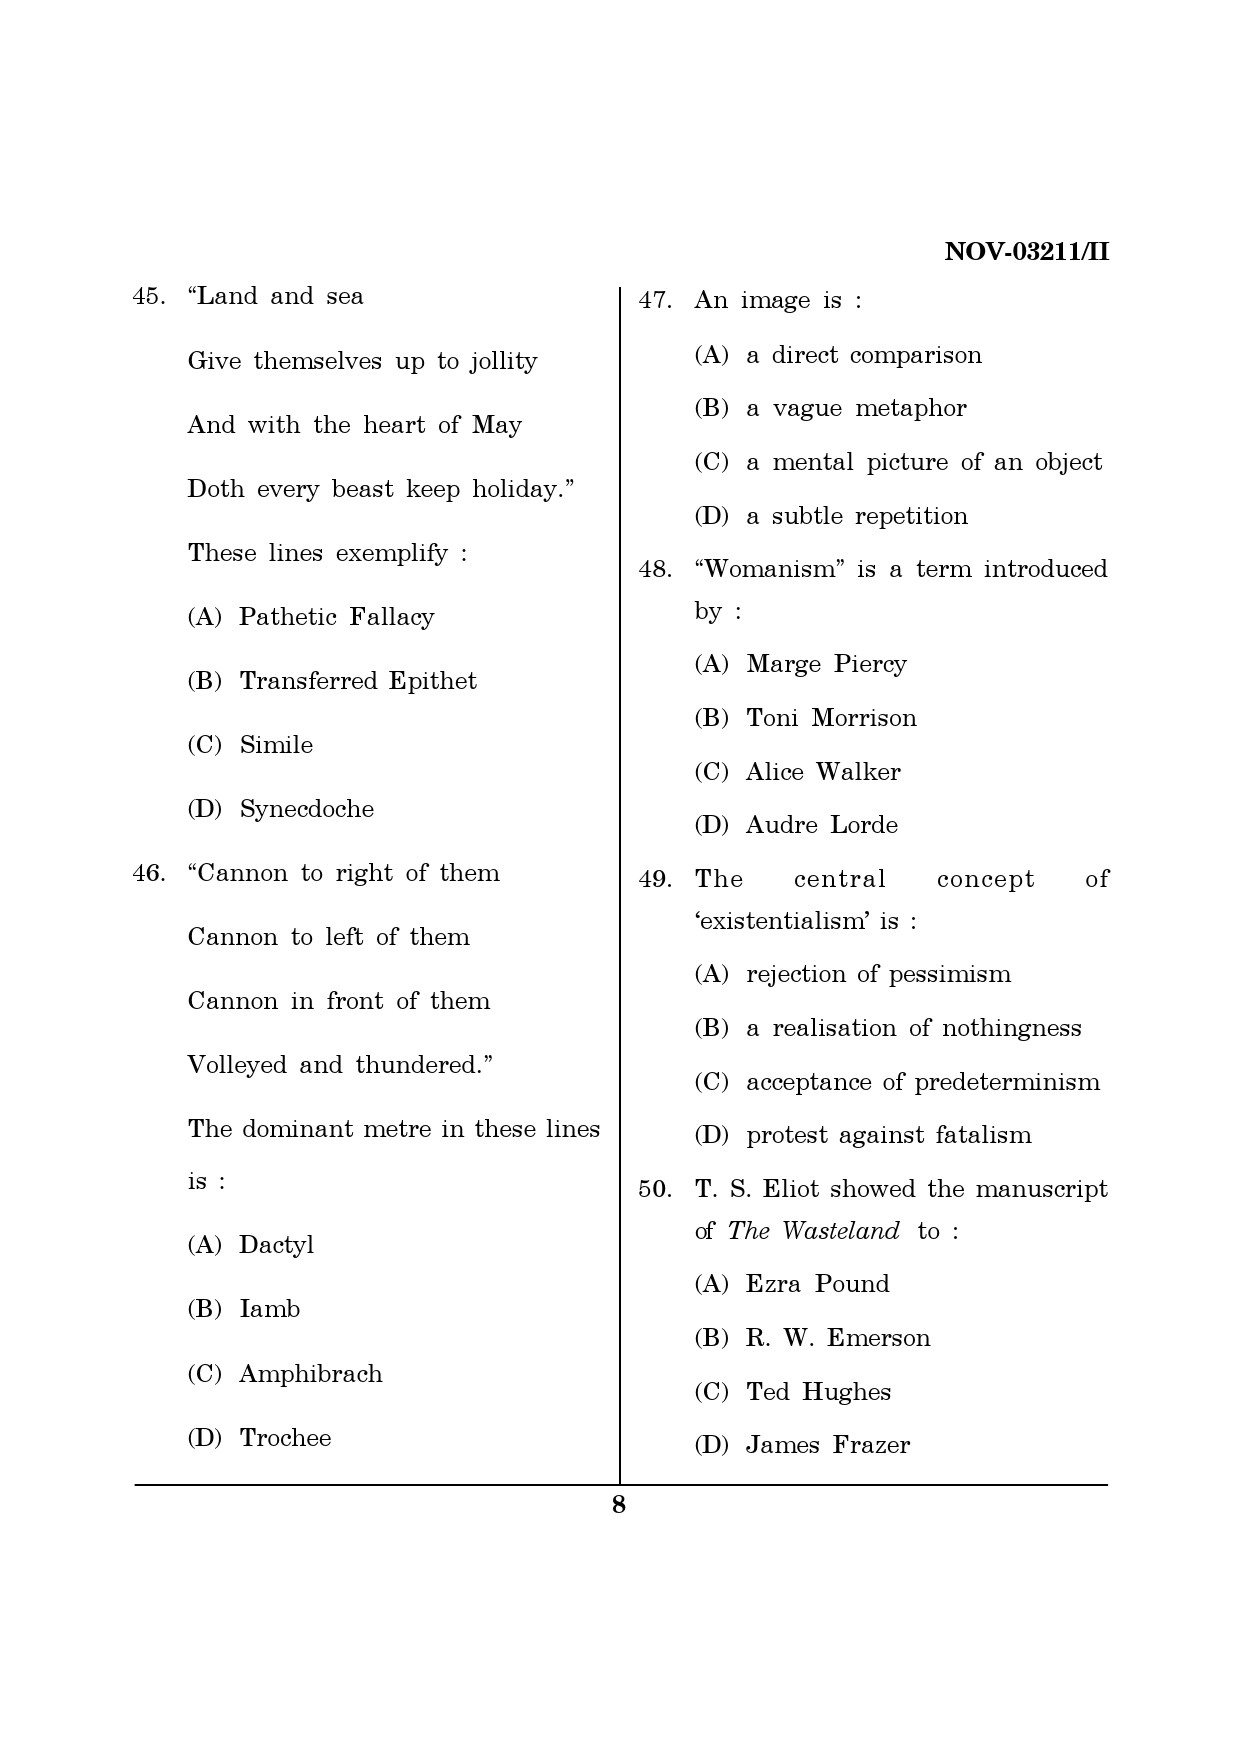 Maharashtra SET English Question Paper II November 2011 8